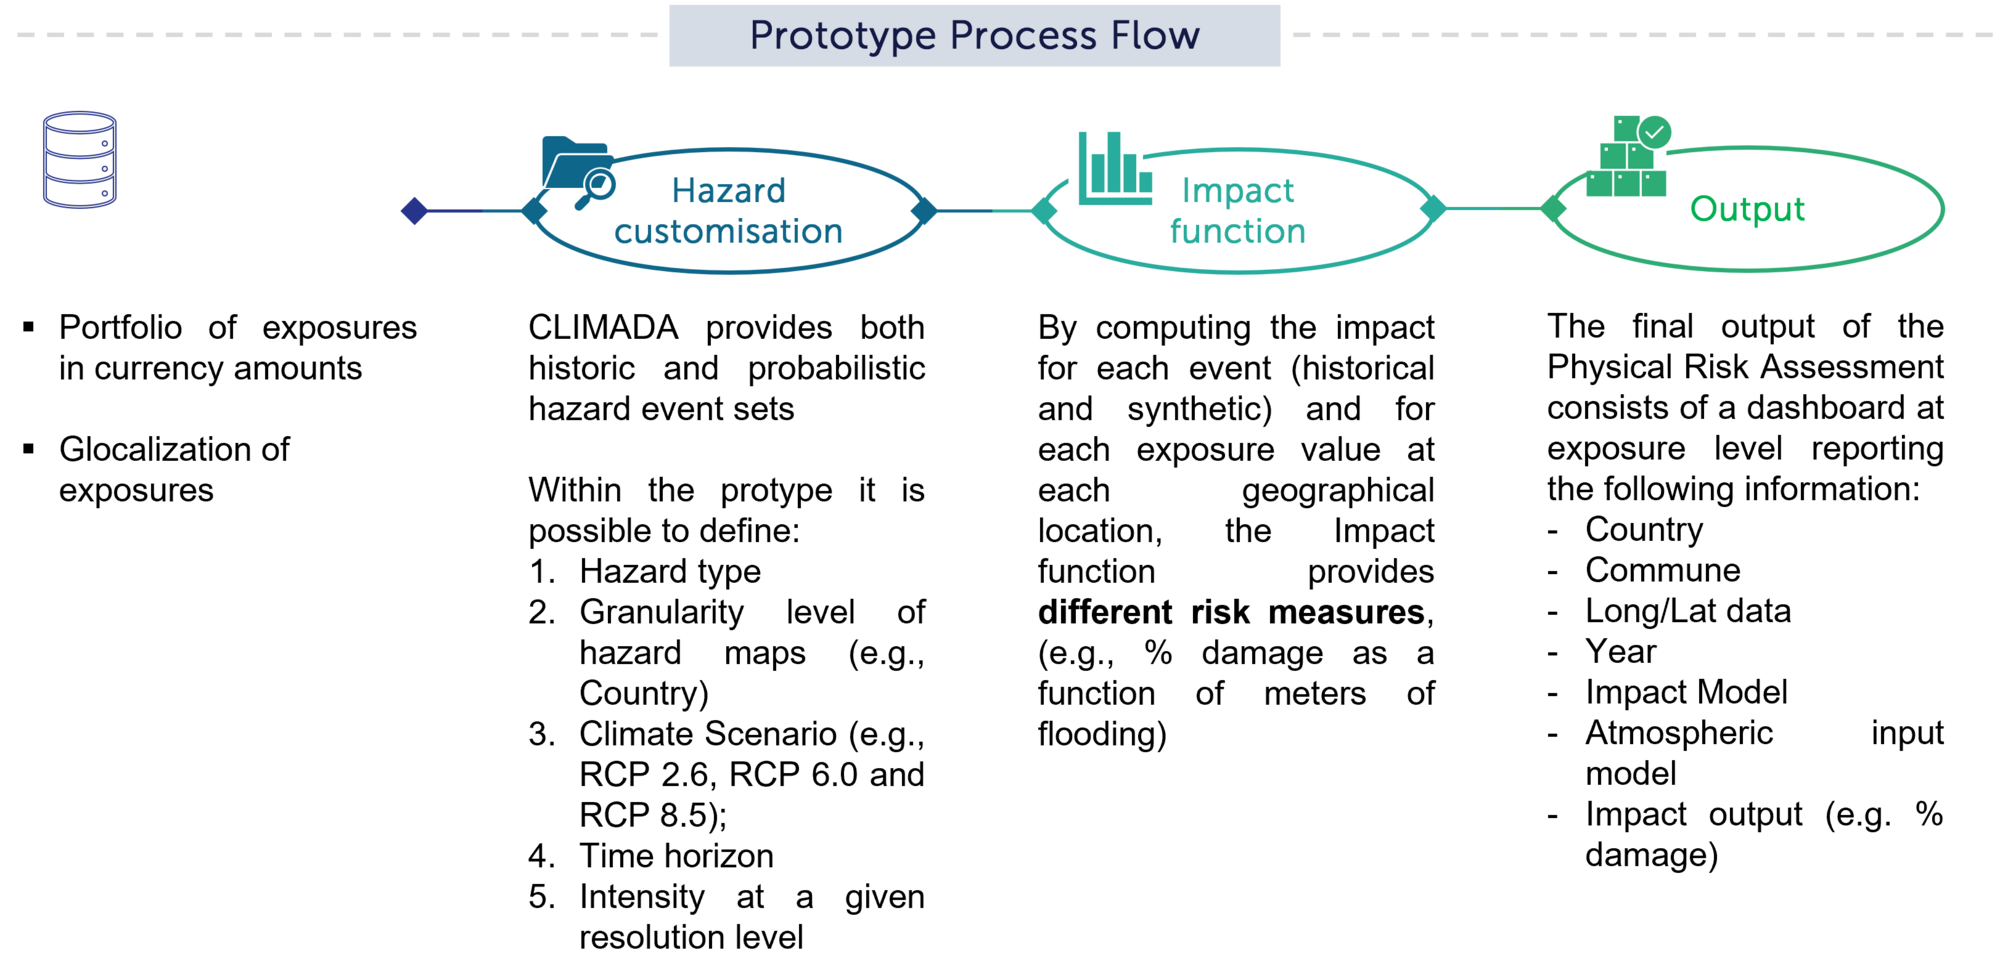 Physical risk impact measurement - prototype process flow 